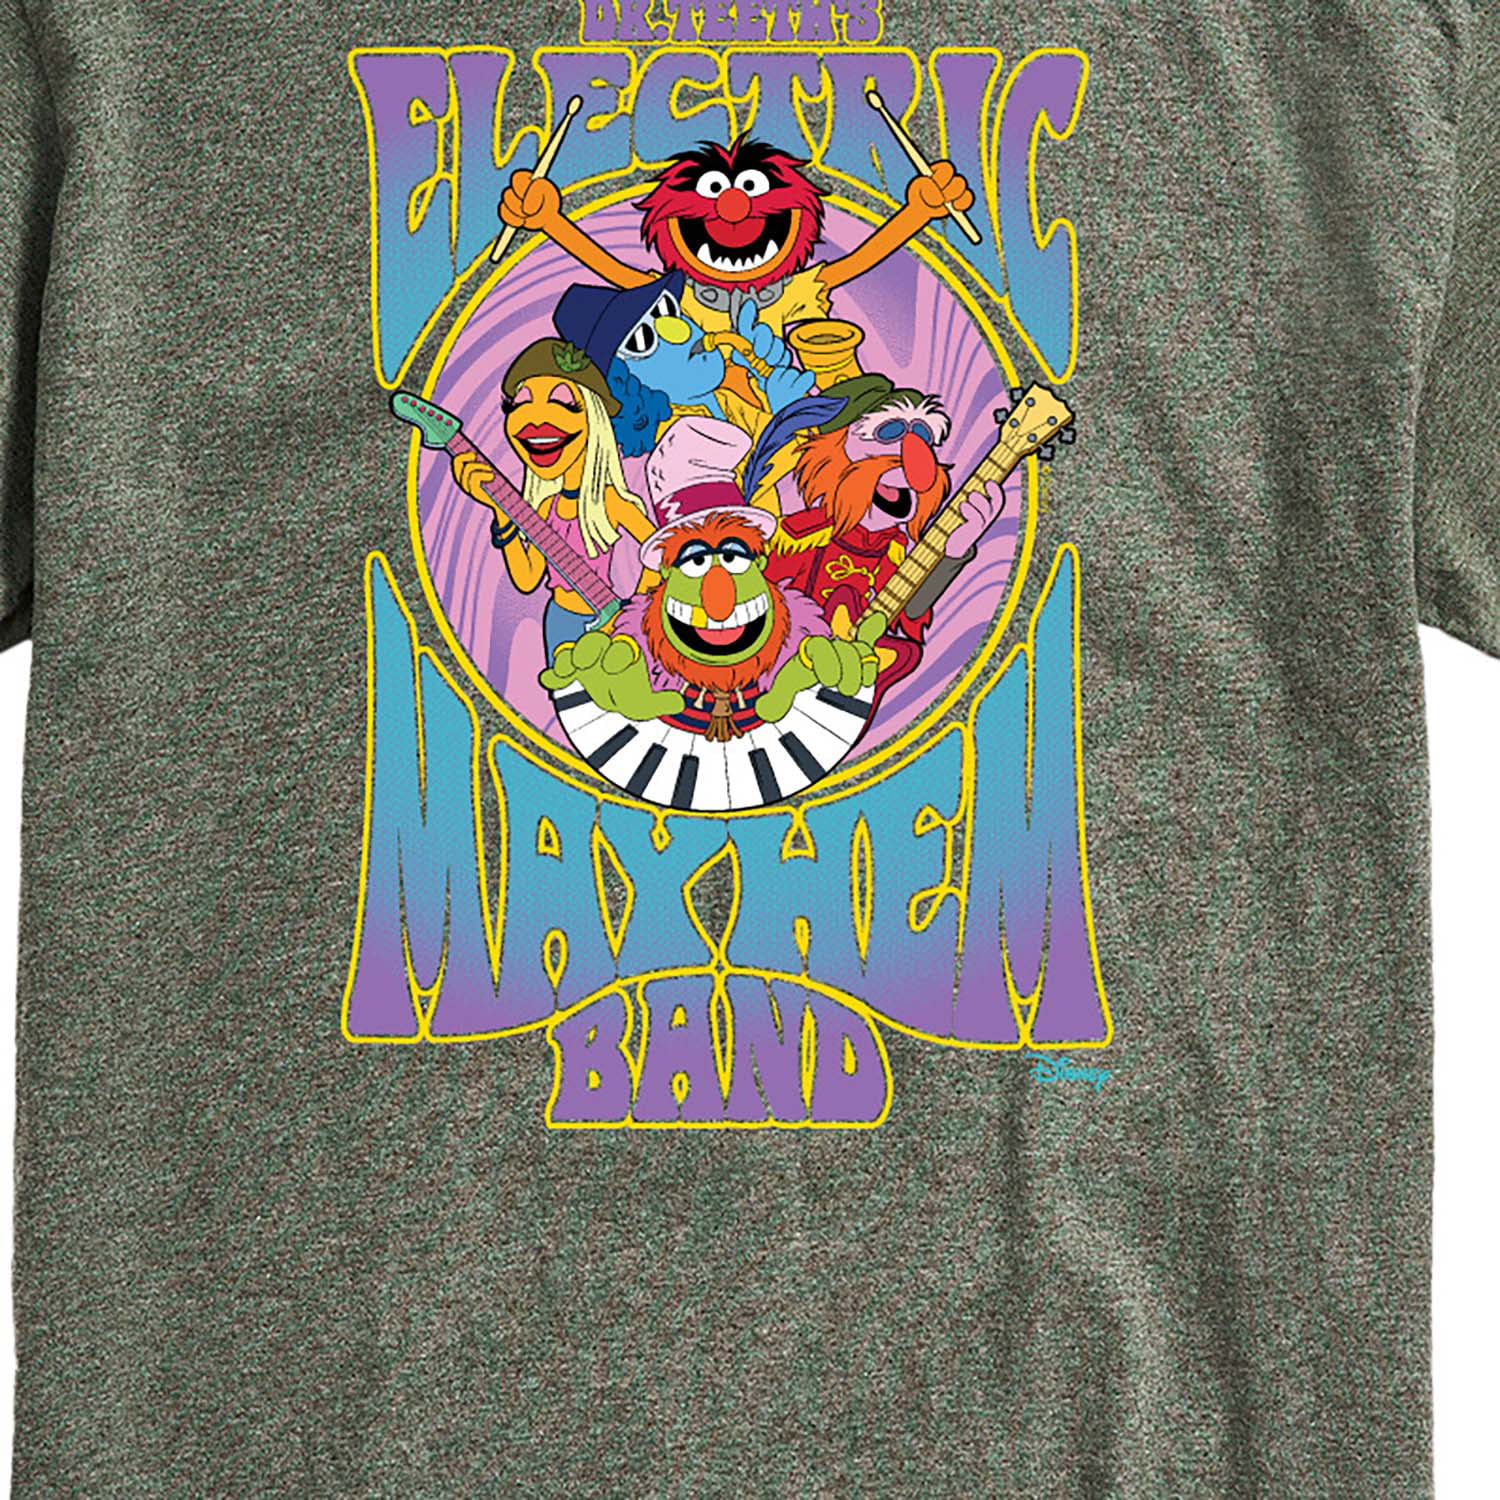 Verkaufsberater Muppets - Dr Teeth Graphic T-Shirt Electric - Mayhem Band Sleeve Men\'s Short